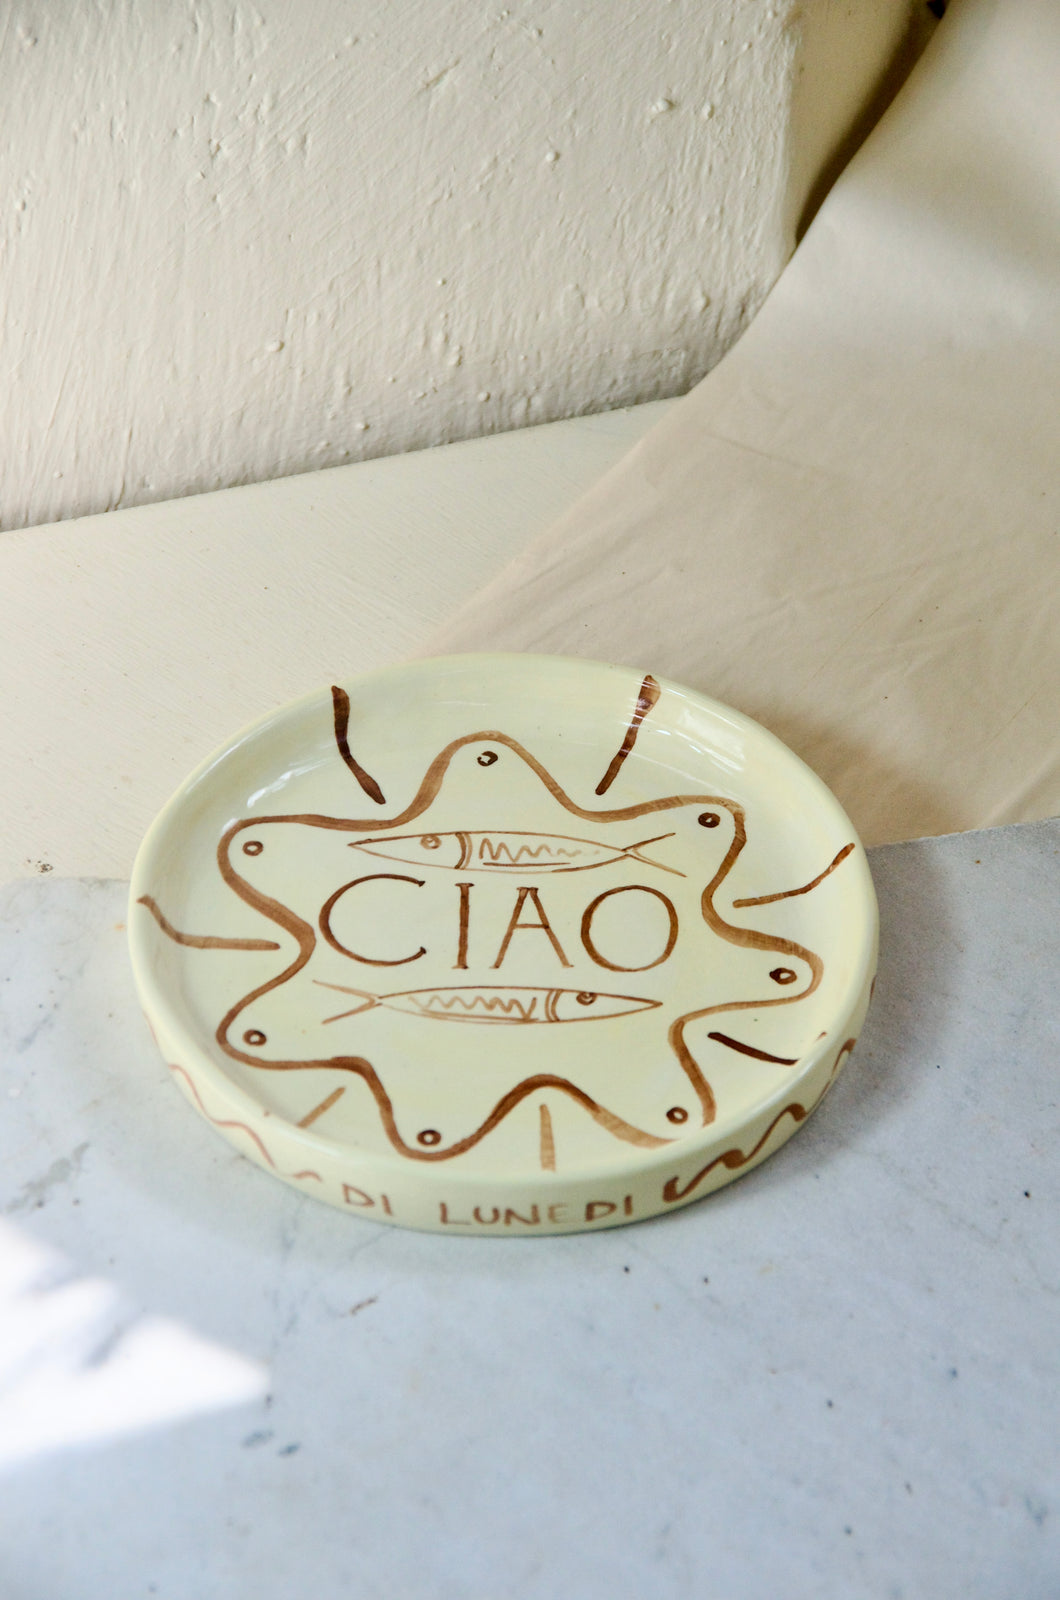 Sardine Plate - Ciao Chocolate